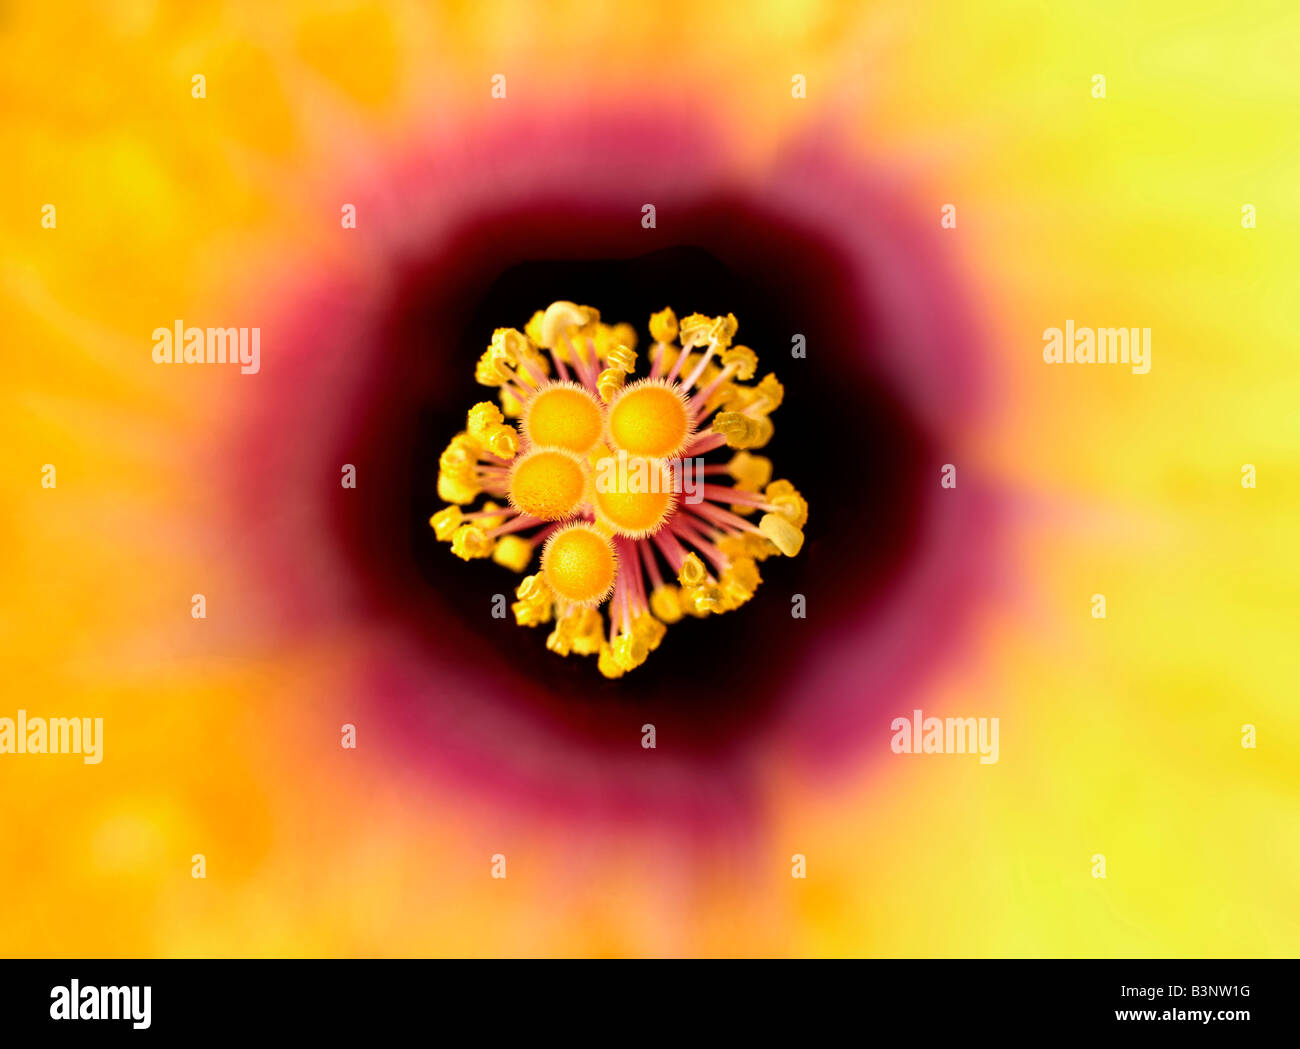 Flower pistil, extreme close-up Stock Photo